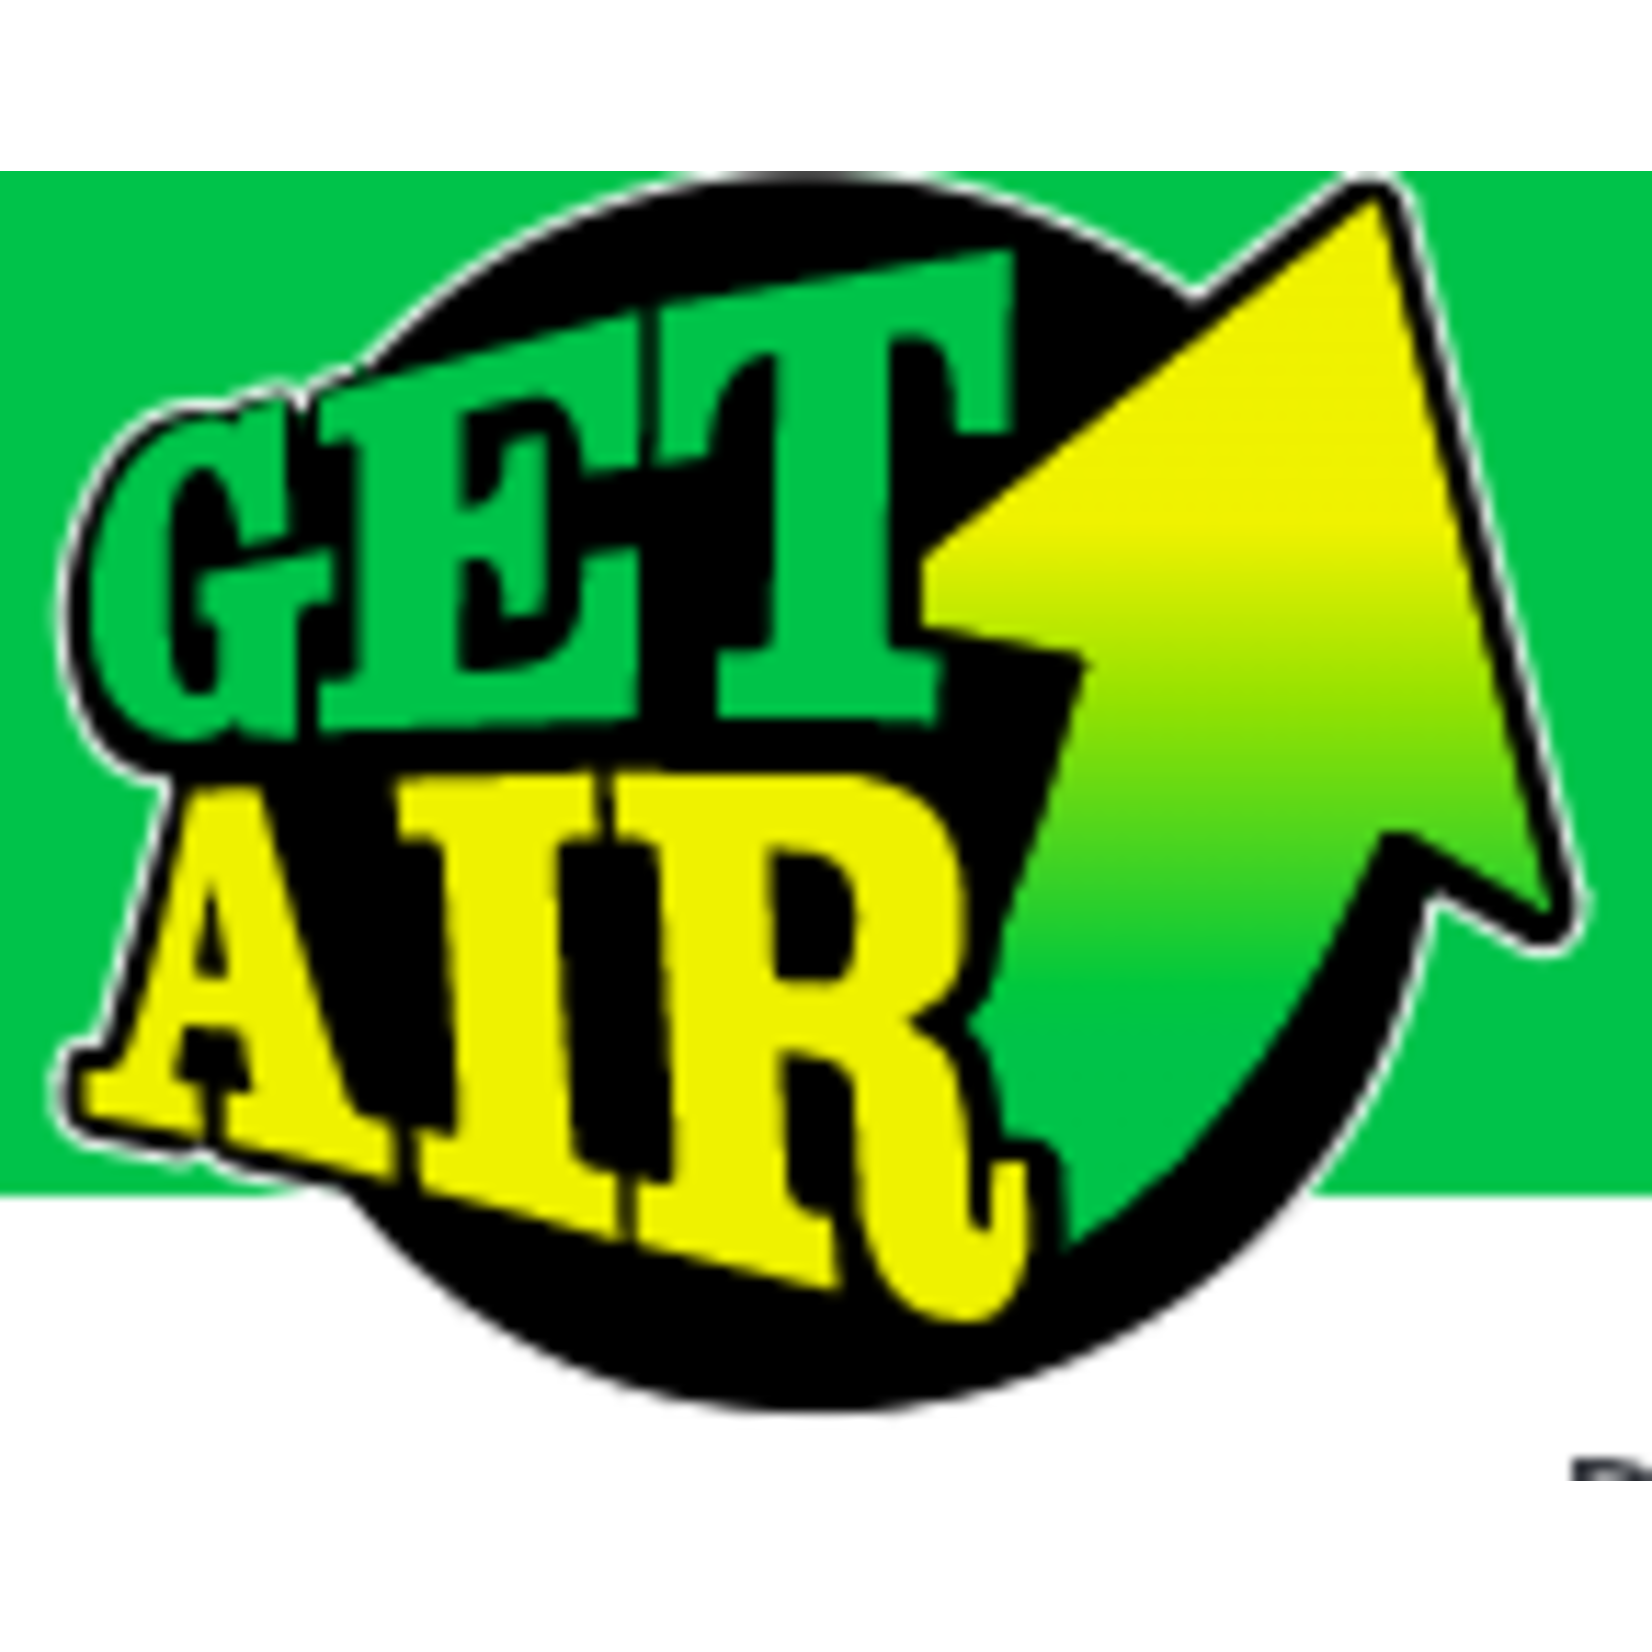 Get Air Trampoline Park-Downers Grove Get Air Trampoline Park-Downers Grove $50 General Certificate